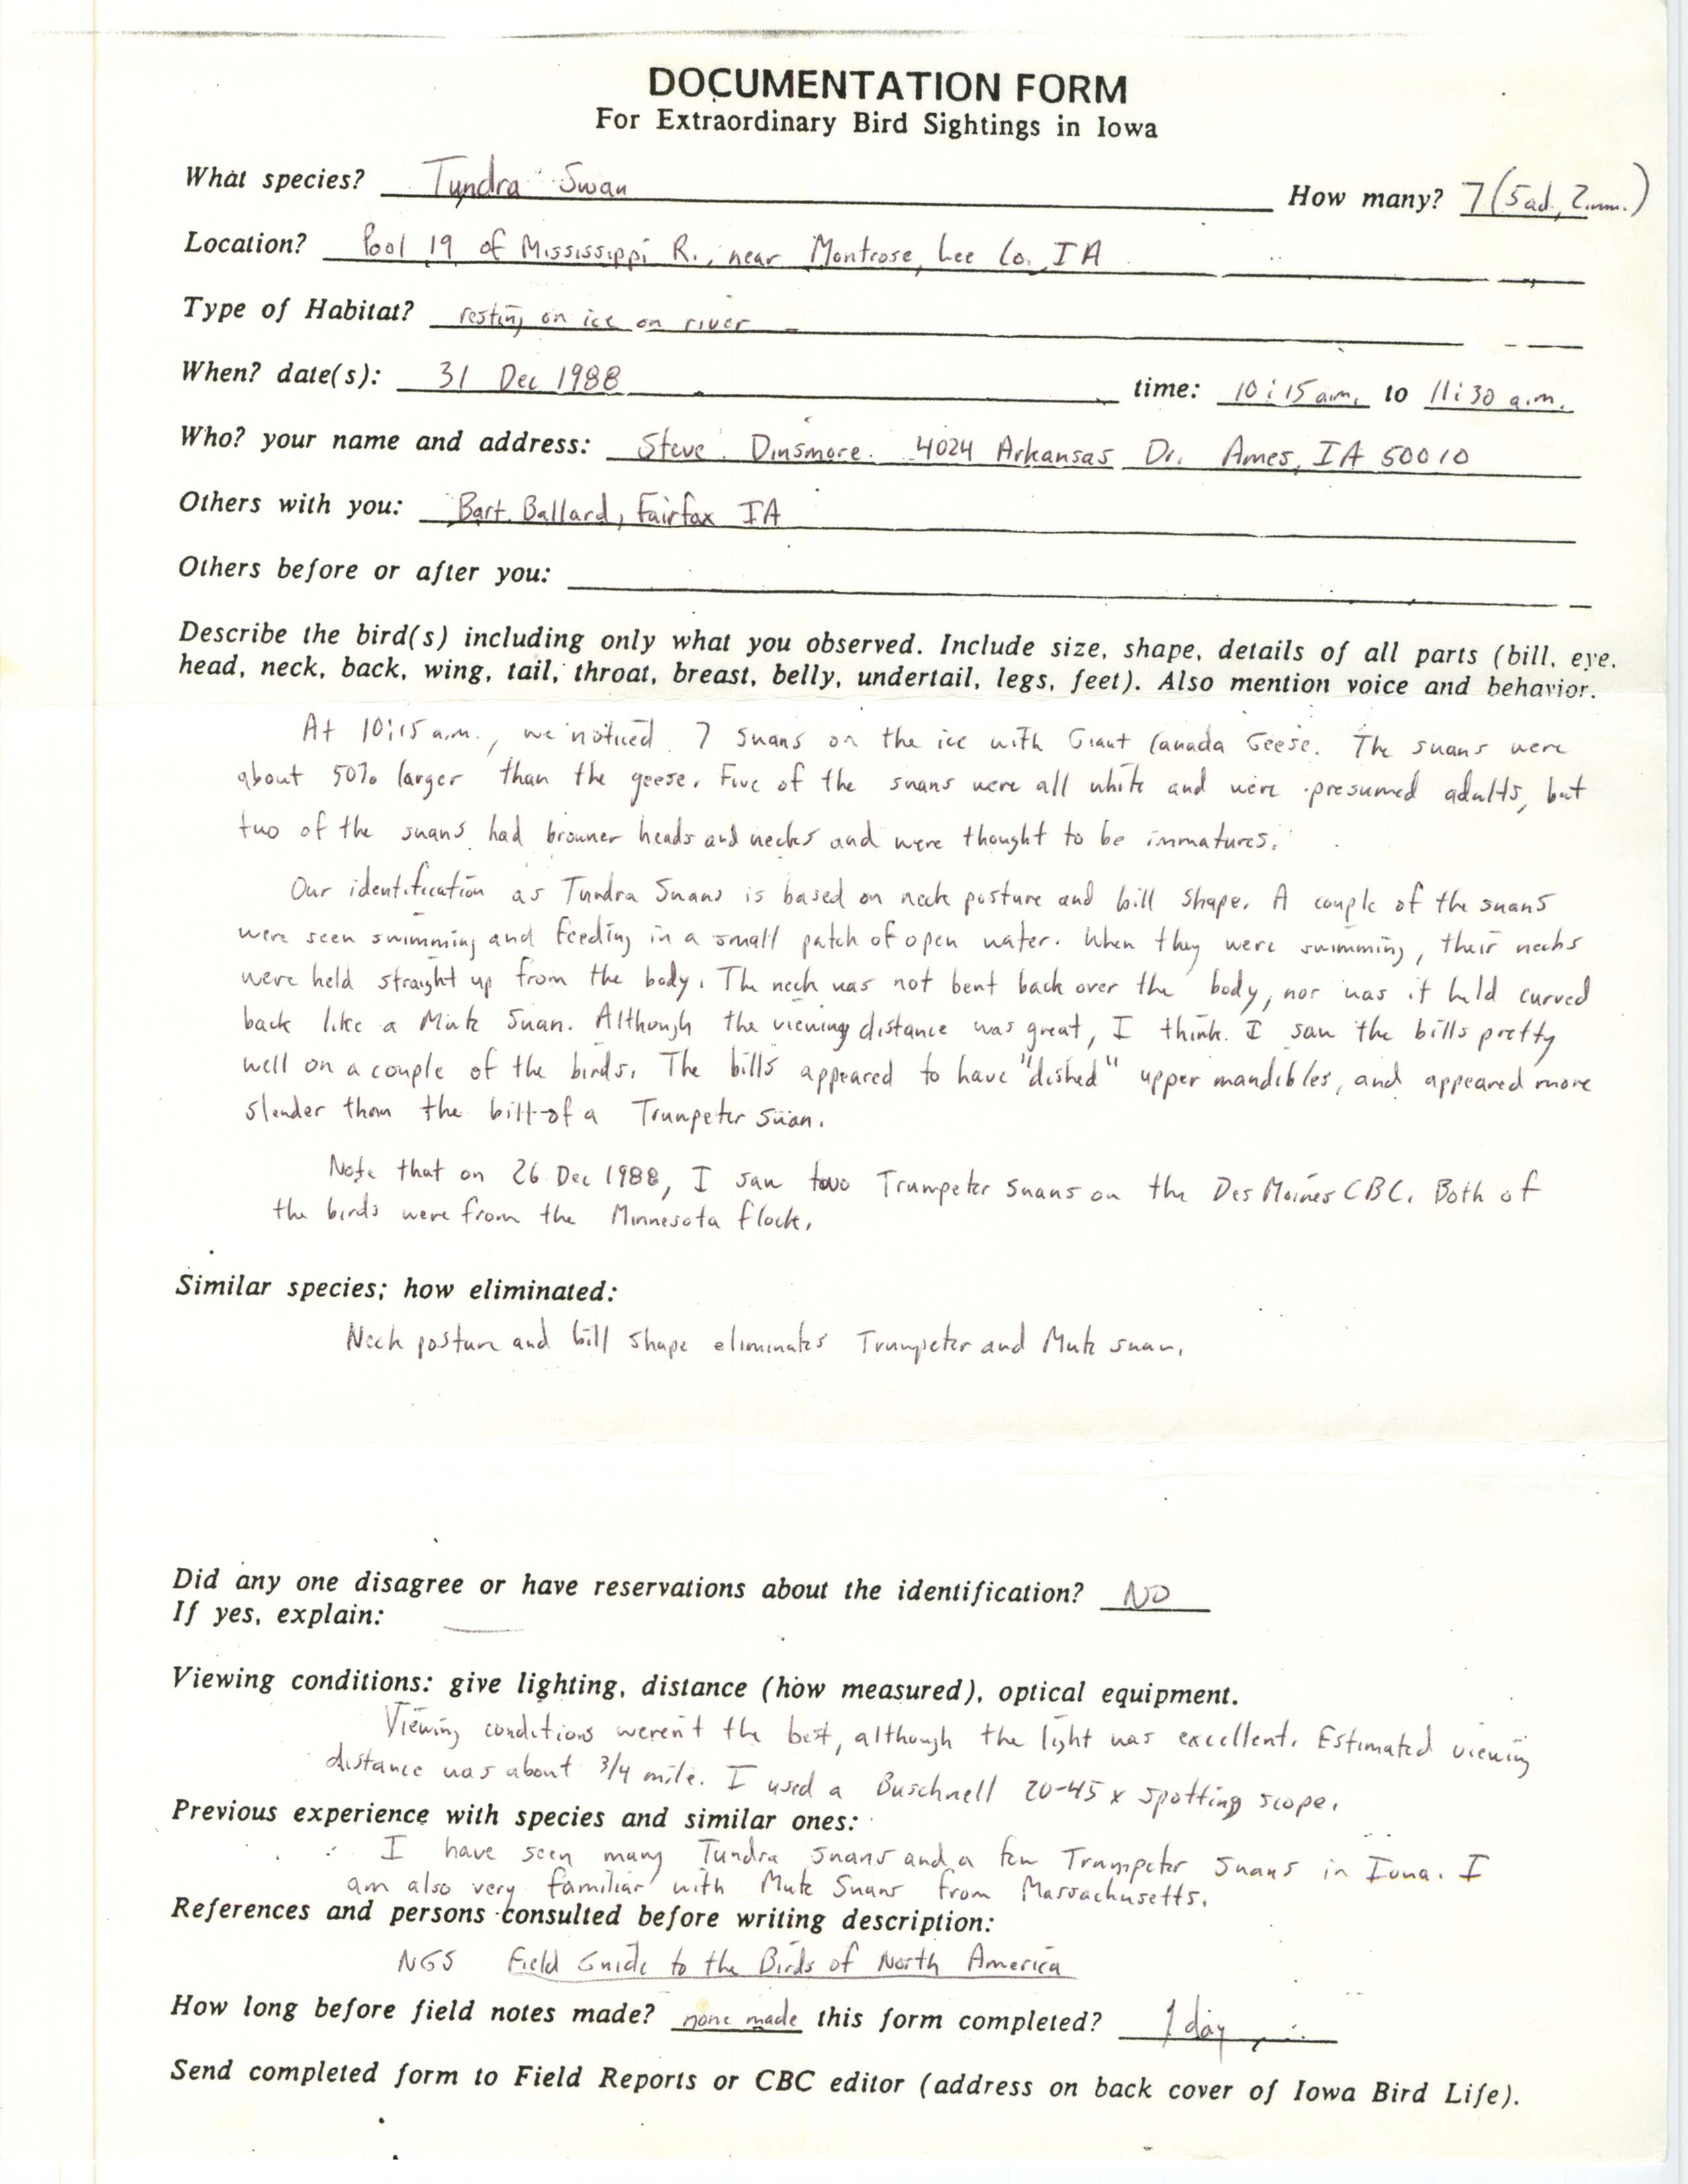 Rare bird documentation form for Tundra Swan at Pool 19, 1988